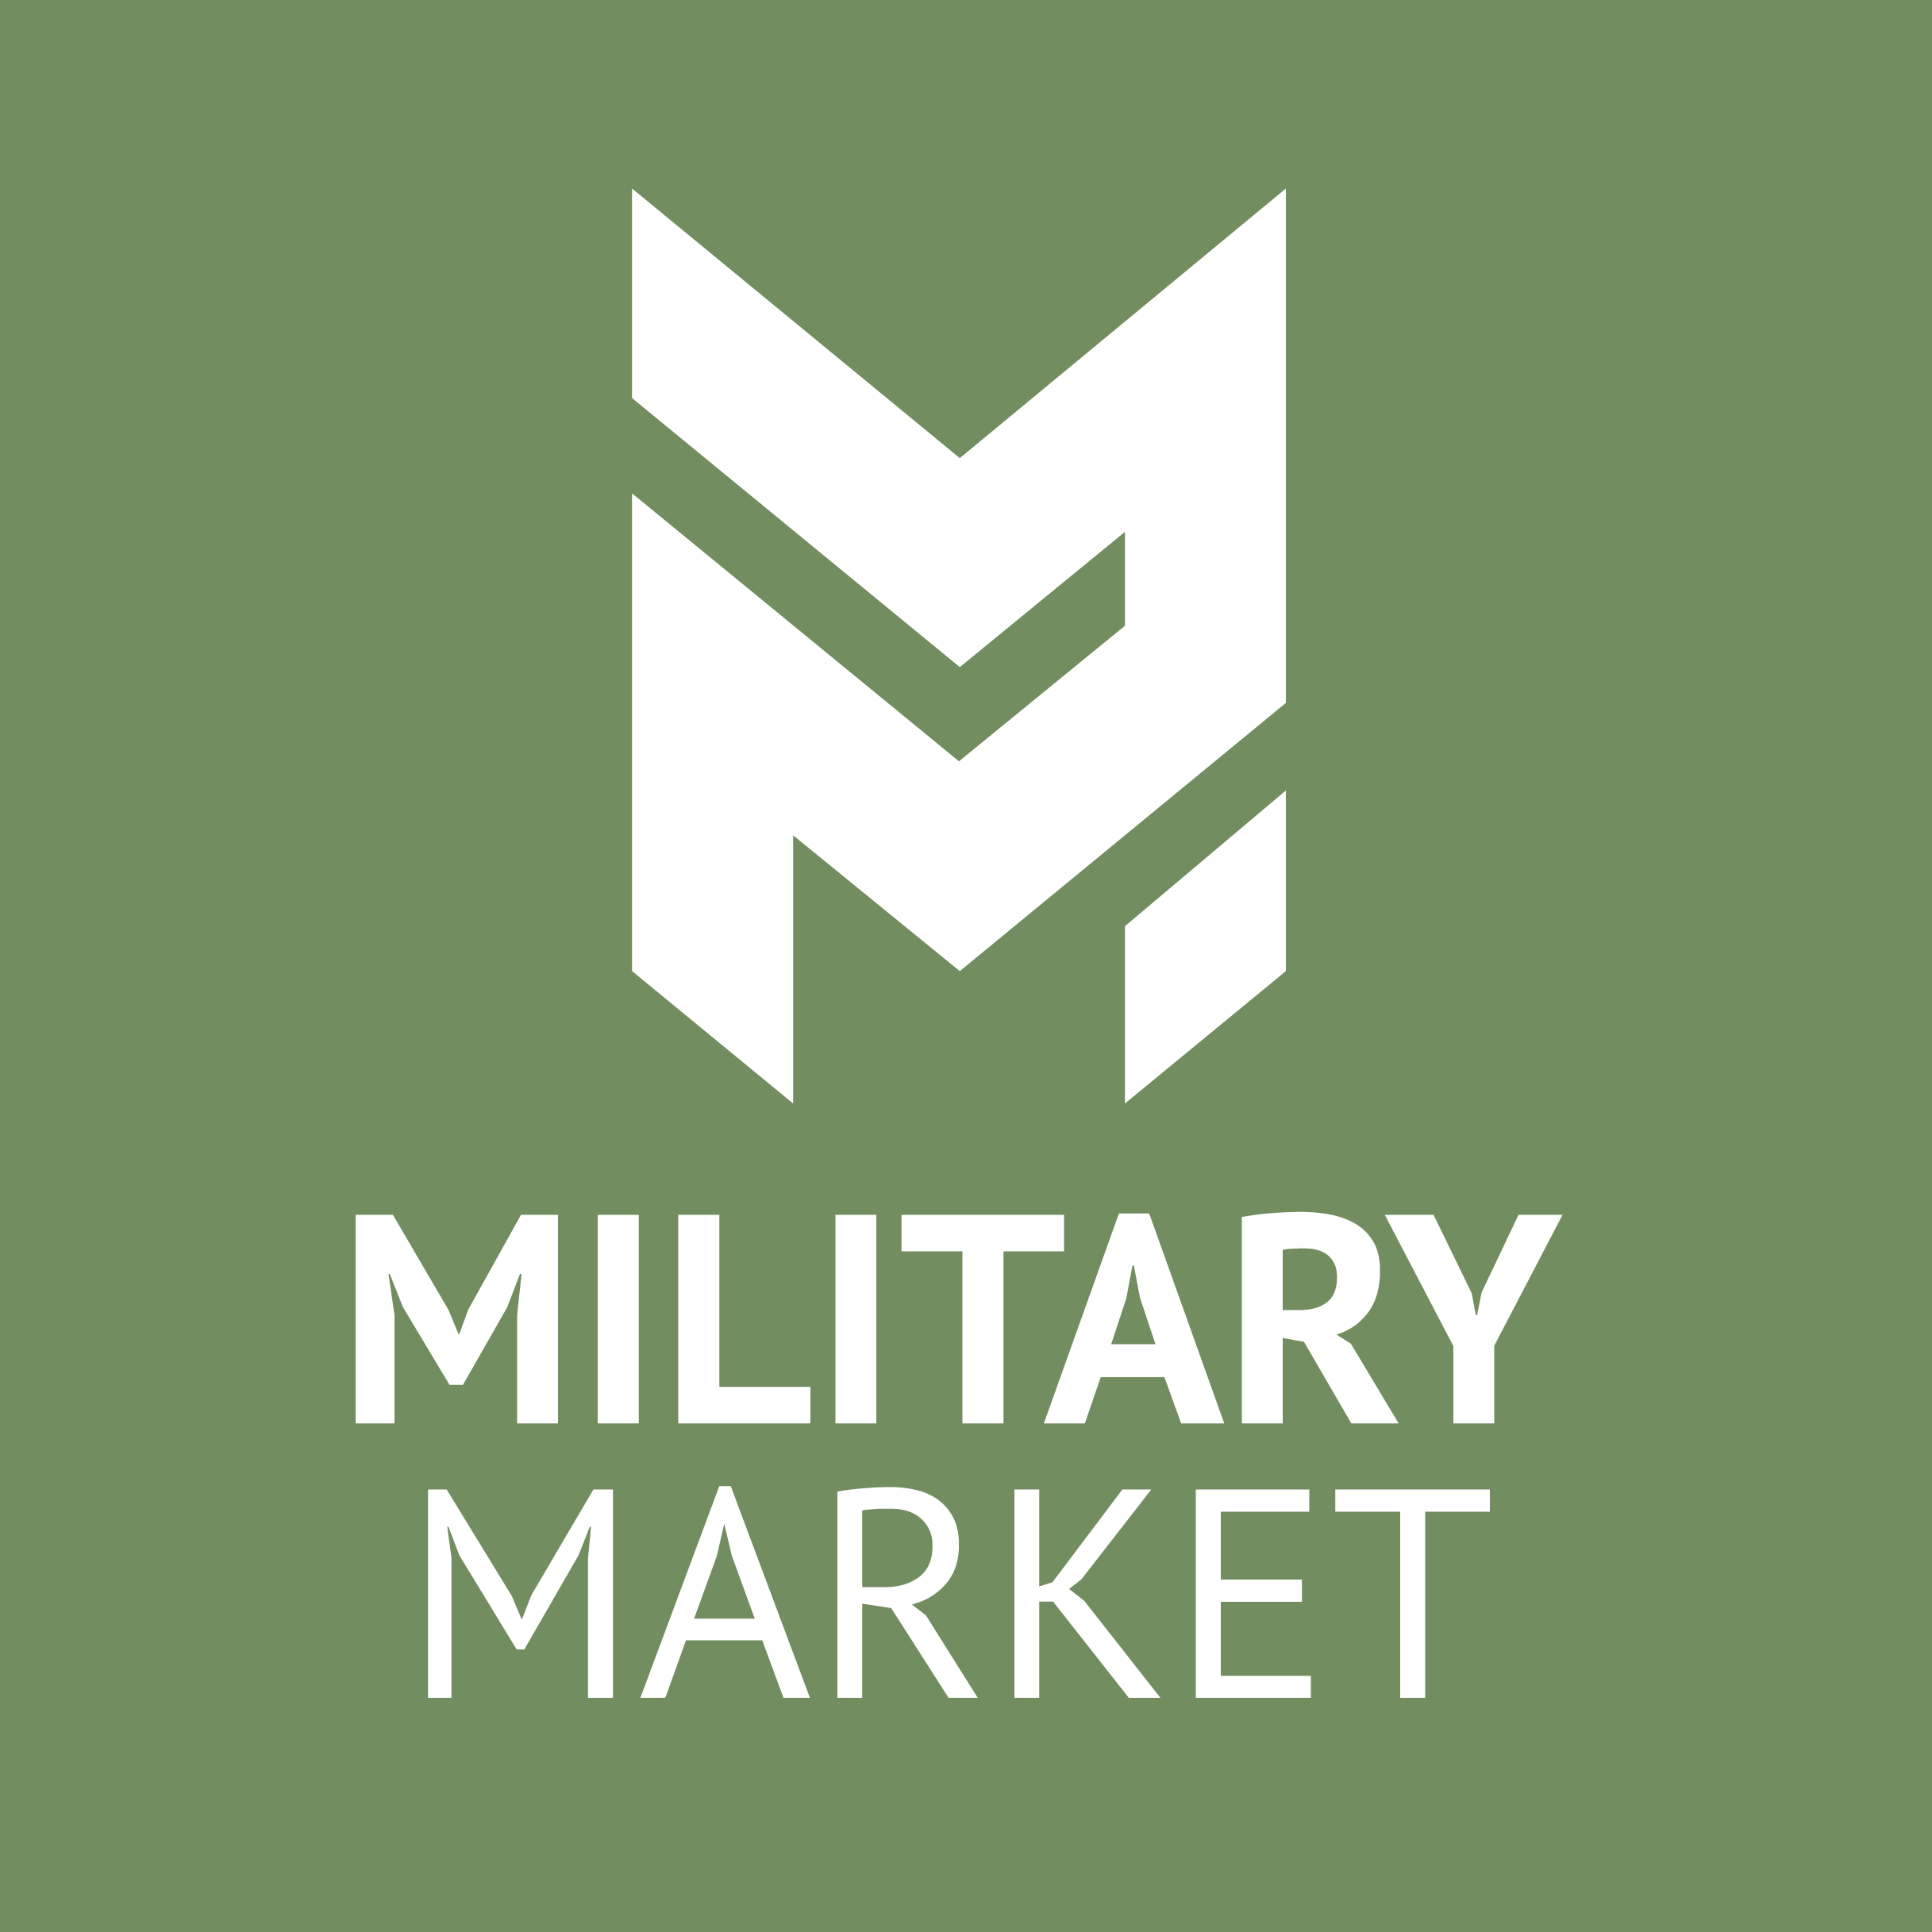   Military Market